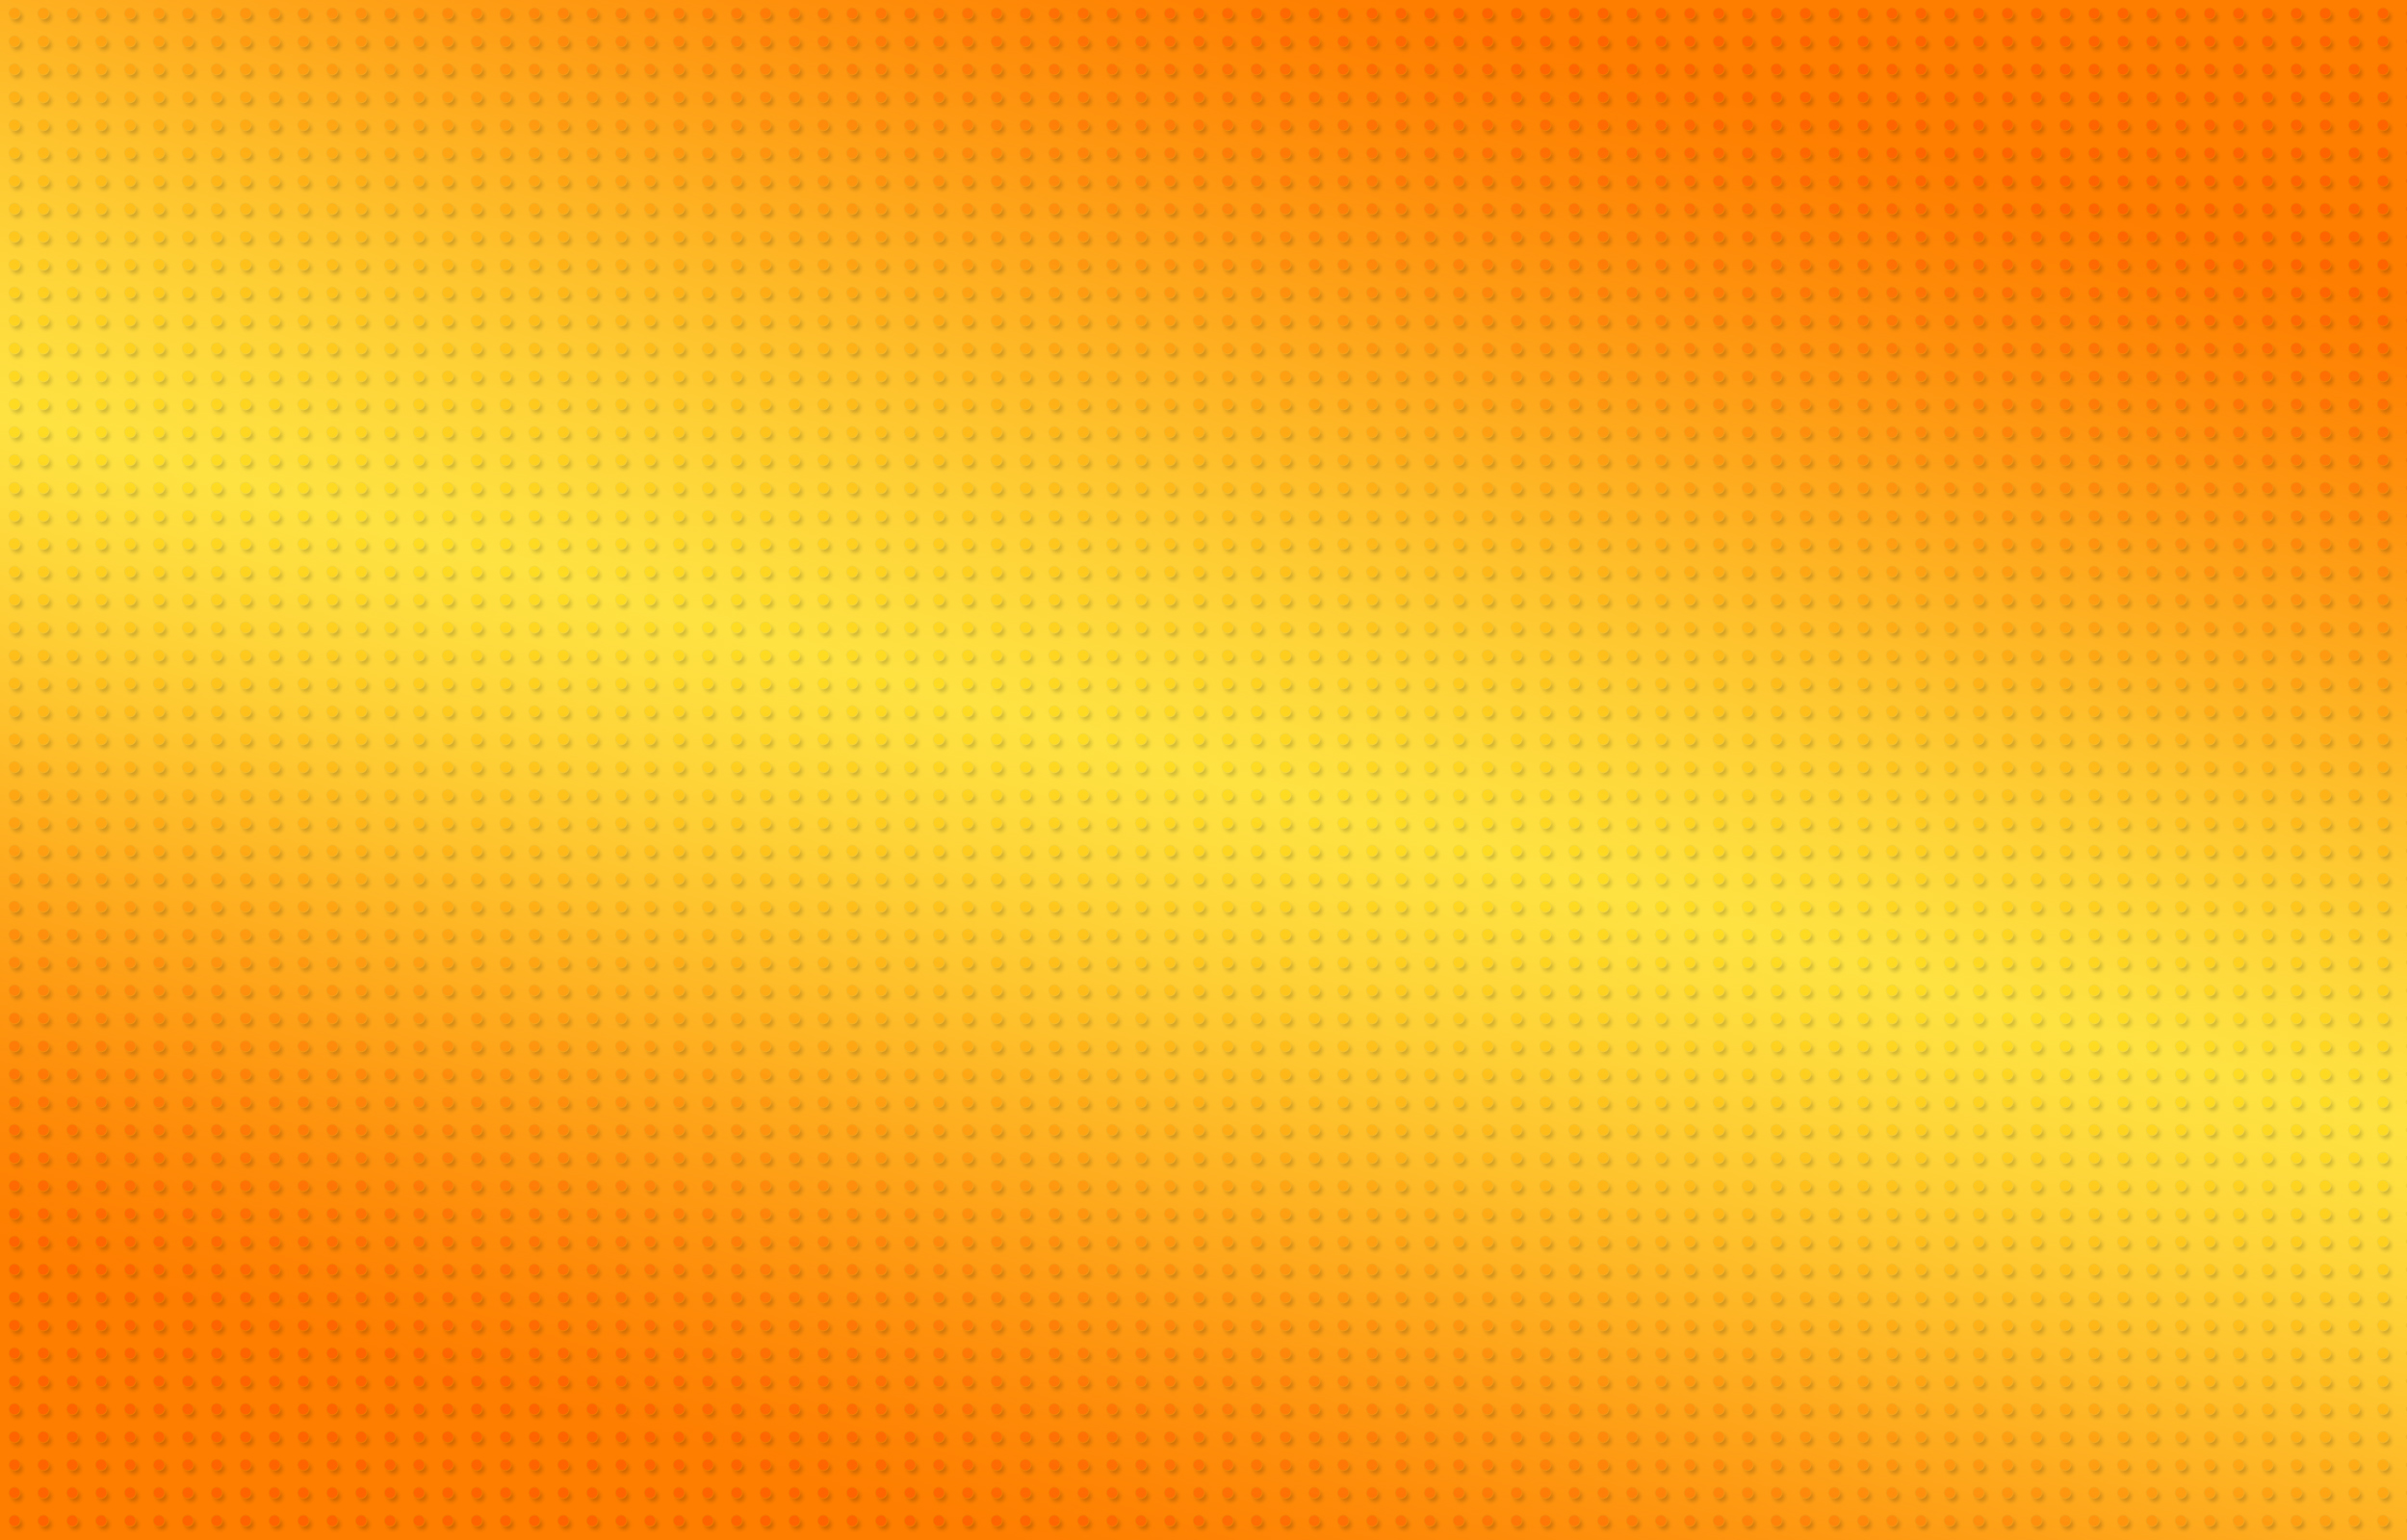 Orange Full HD Wallpaper And Background 2500x1600 ID272707